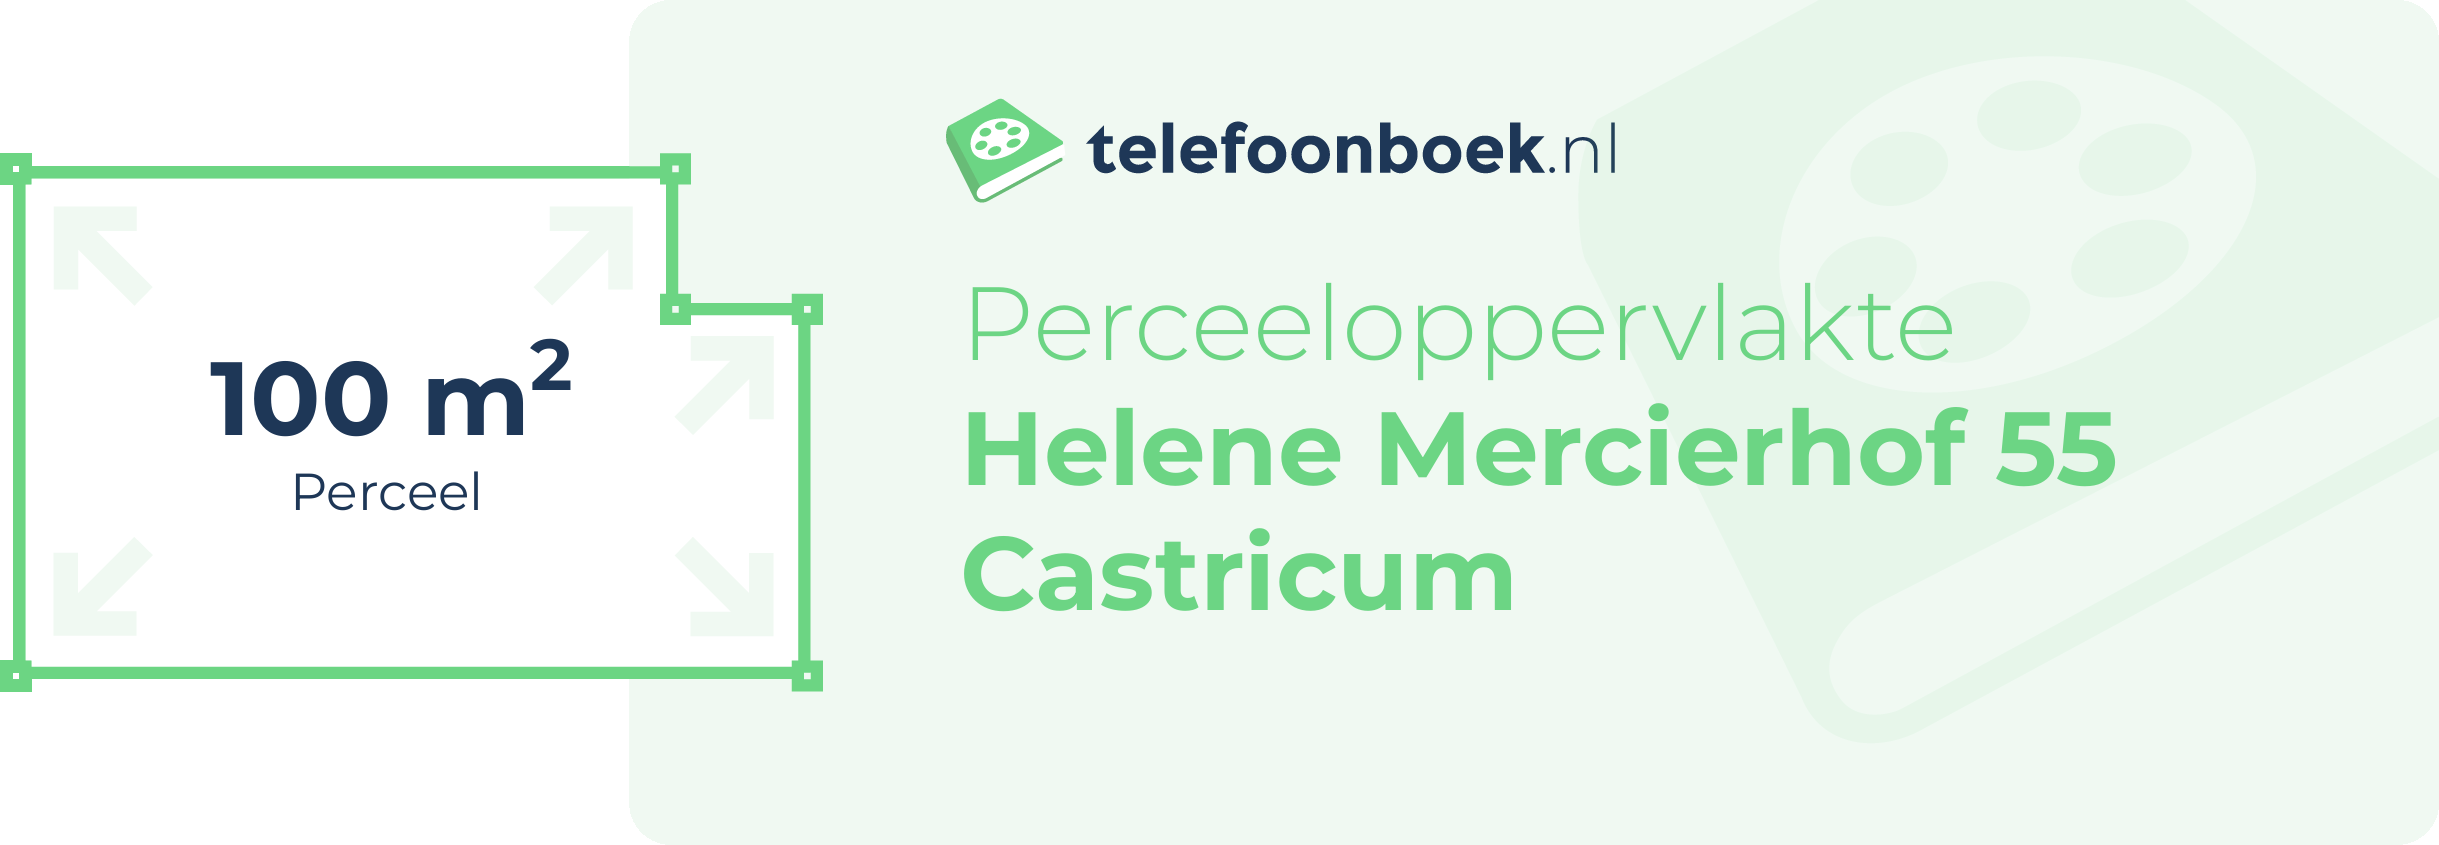 Perceeloppervlakte Helene Mercierhof 55 Castricum